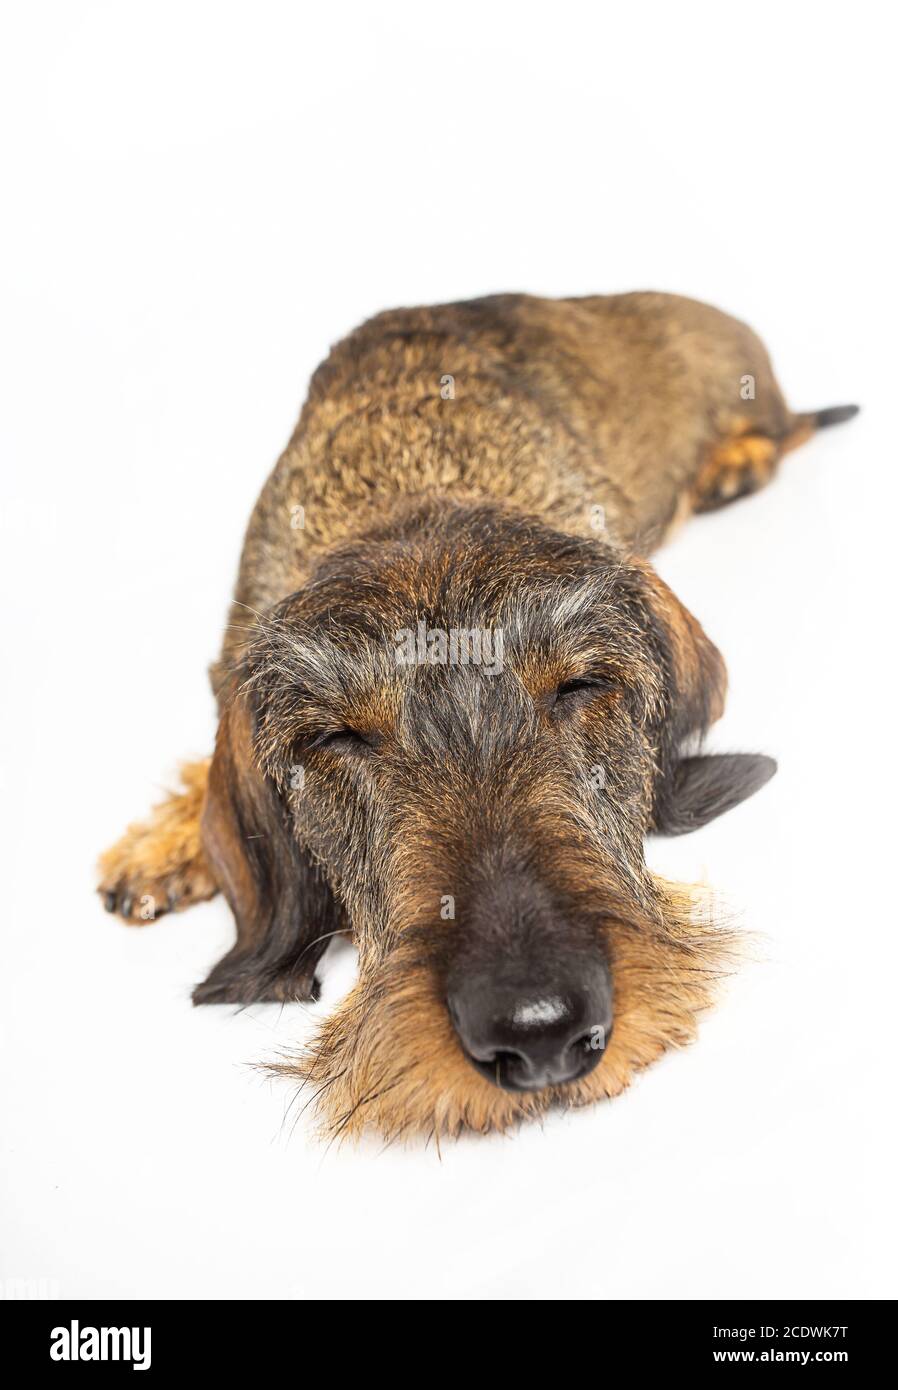 Sleeping wiener dog Stock Photo